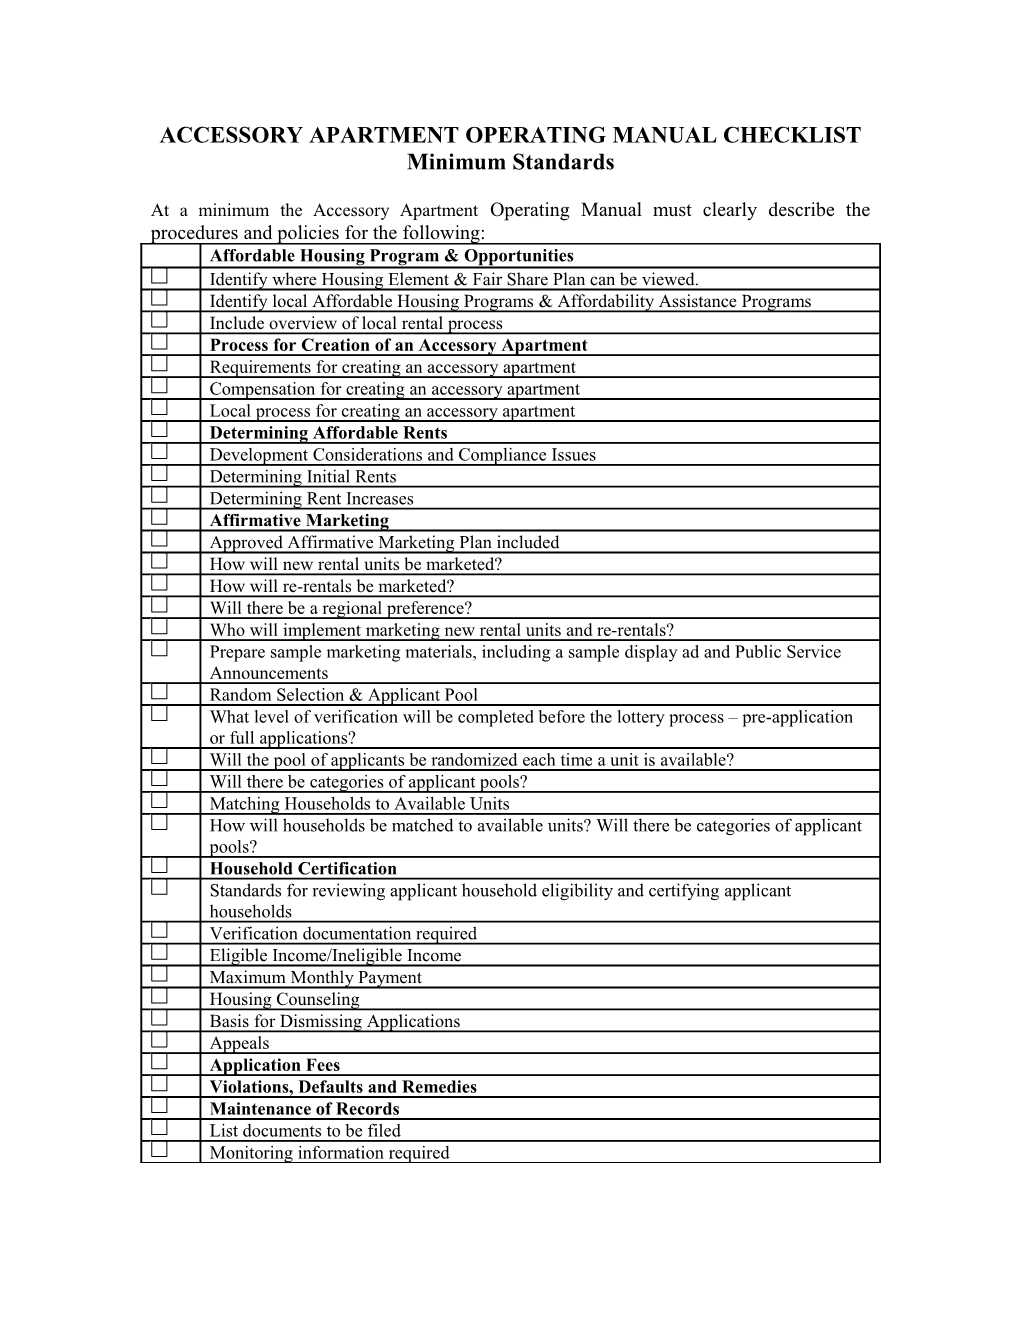 Accessory Apartment Operating Manual Checklist